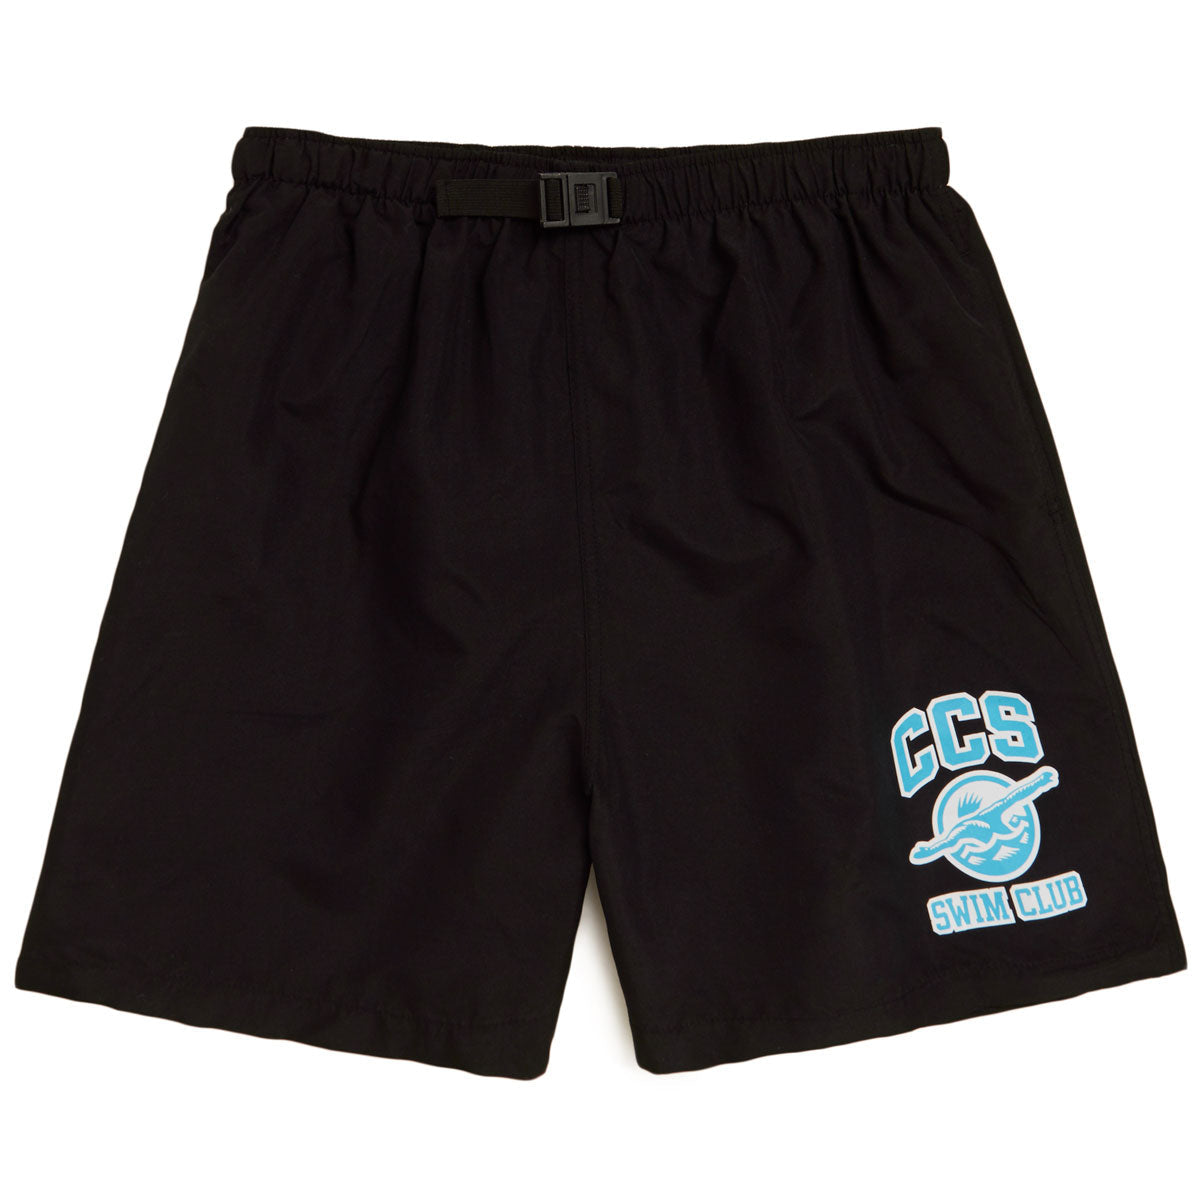 CCS Swim Club Hybrid Shorts - Black image 1